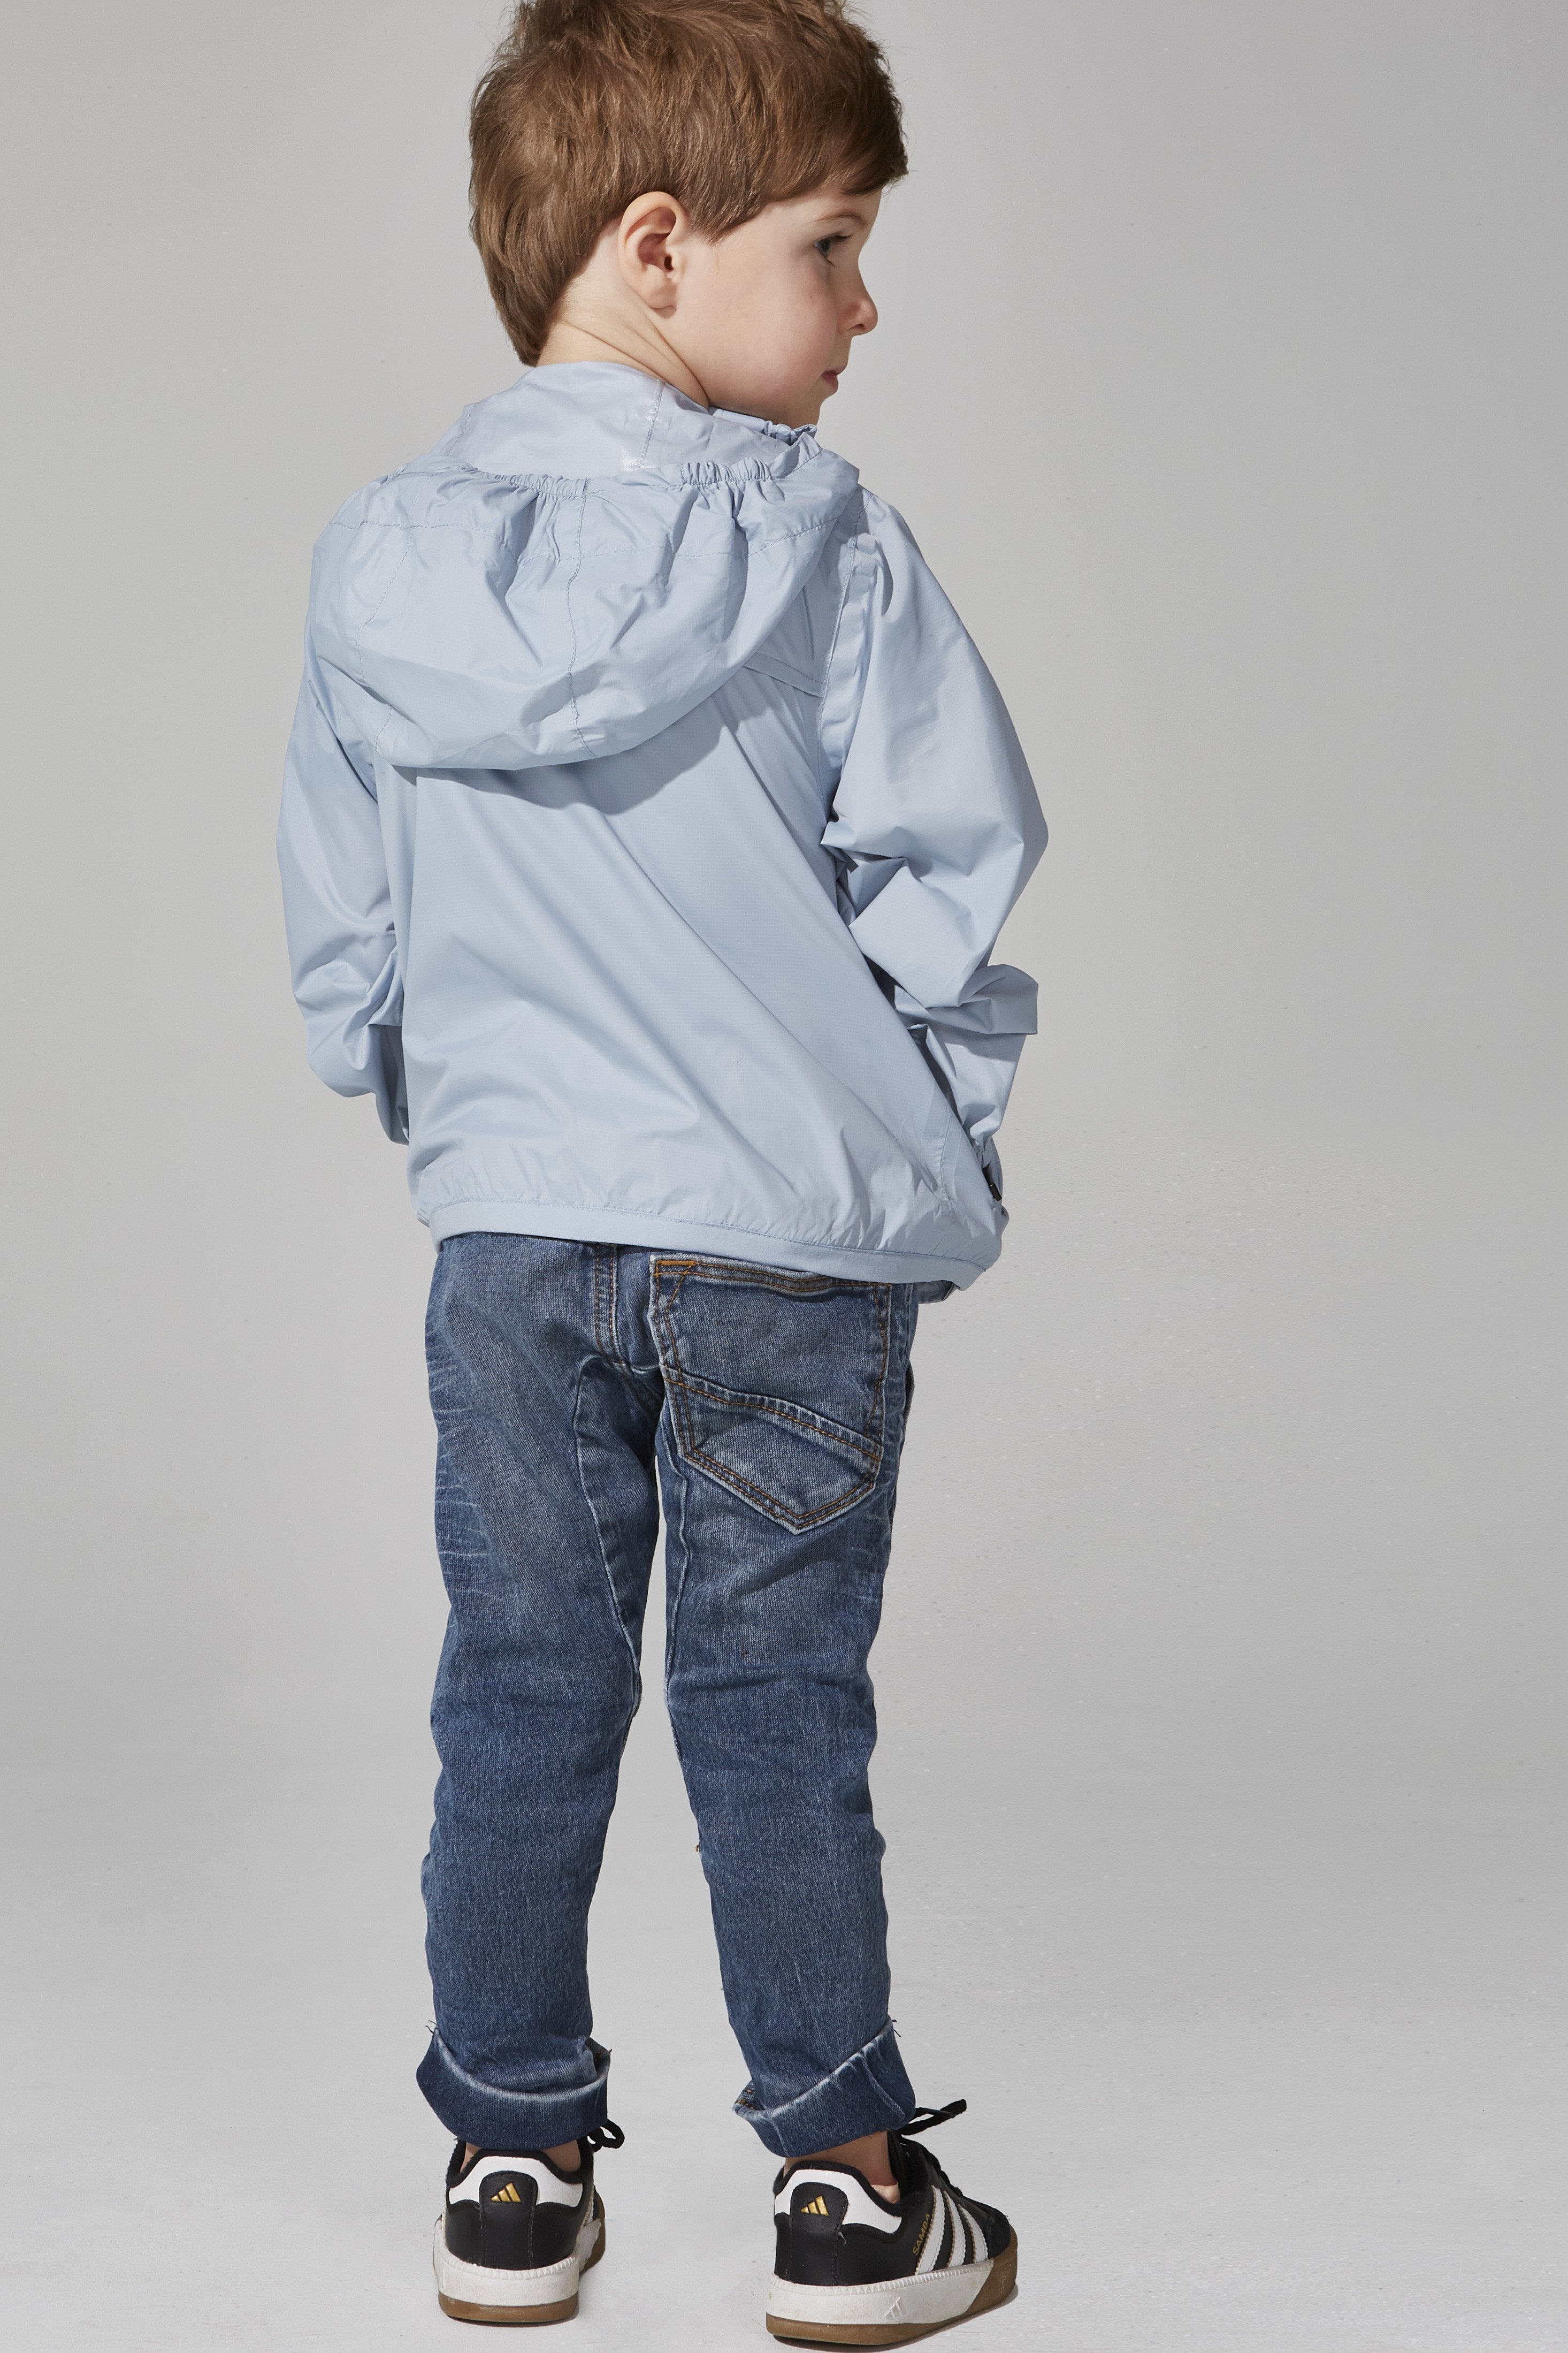 Sam - Kids Celestial Blue Full Zip Packable Rain Jacket - O8lifestyle.